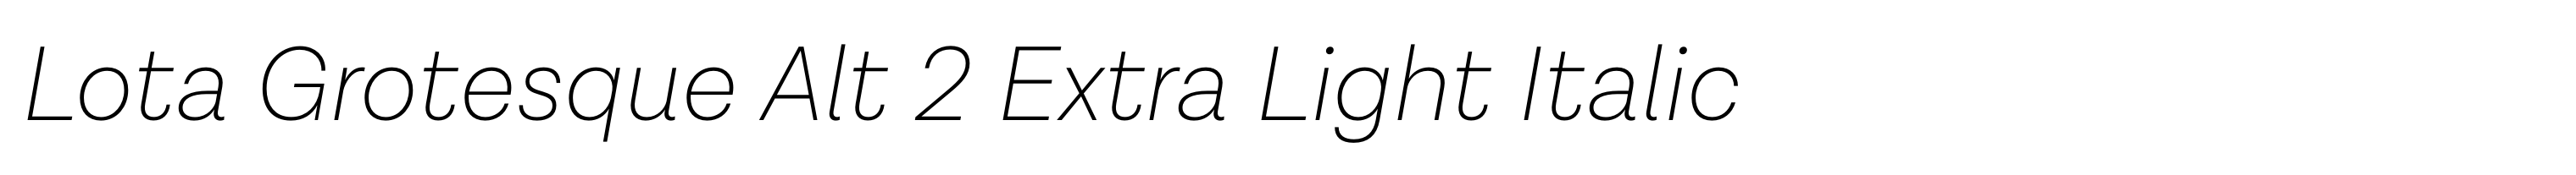 Lota Grotesque Alt 2 Extra Light Italic